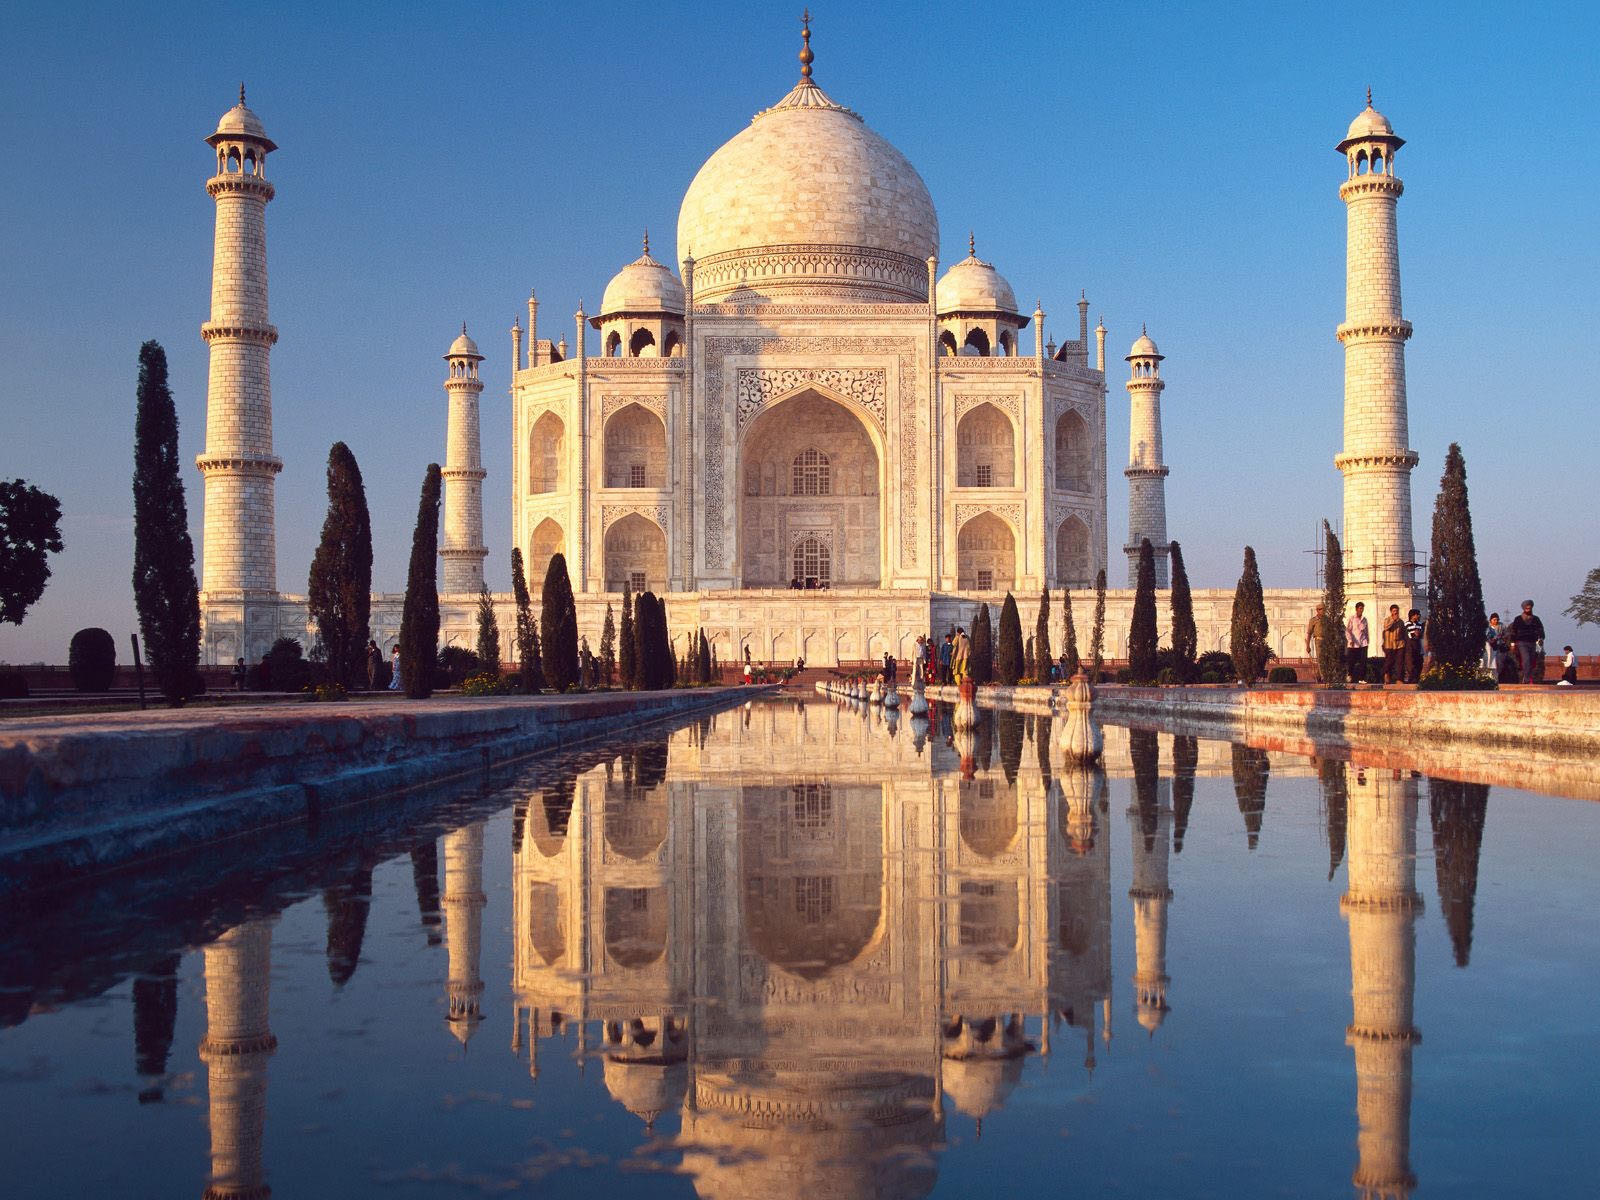 Taj Mahal Agra India Hd Widescreen Desktop And Mobile Screen Hd Wallpapers